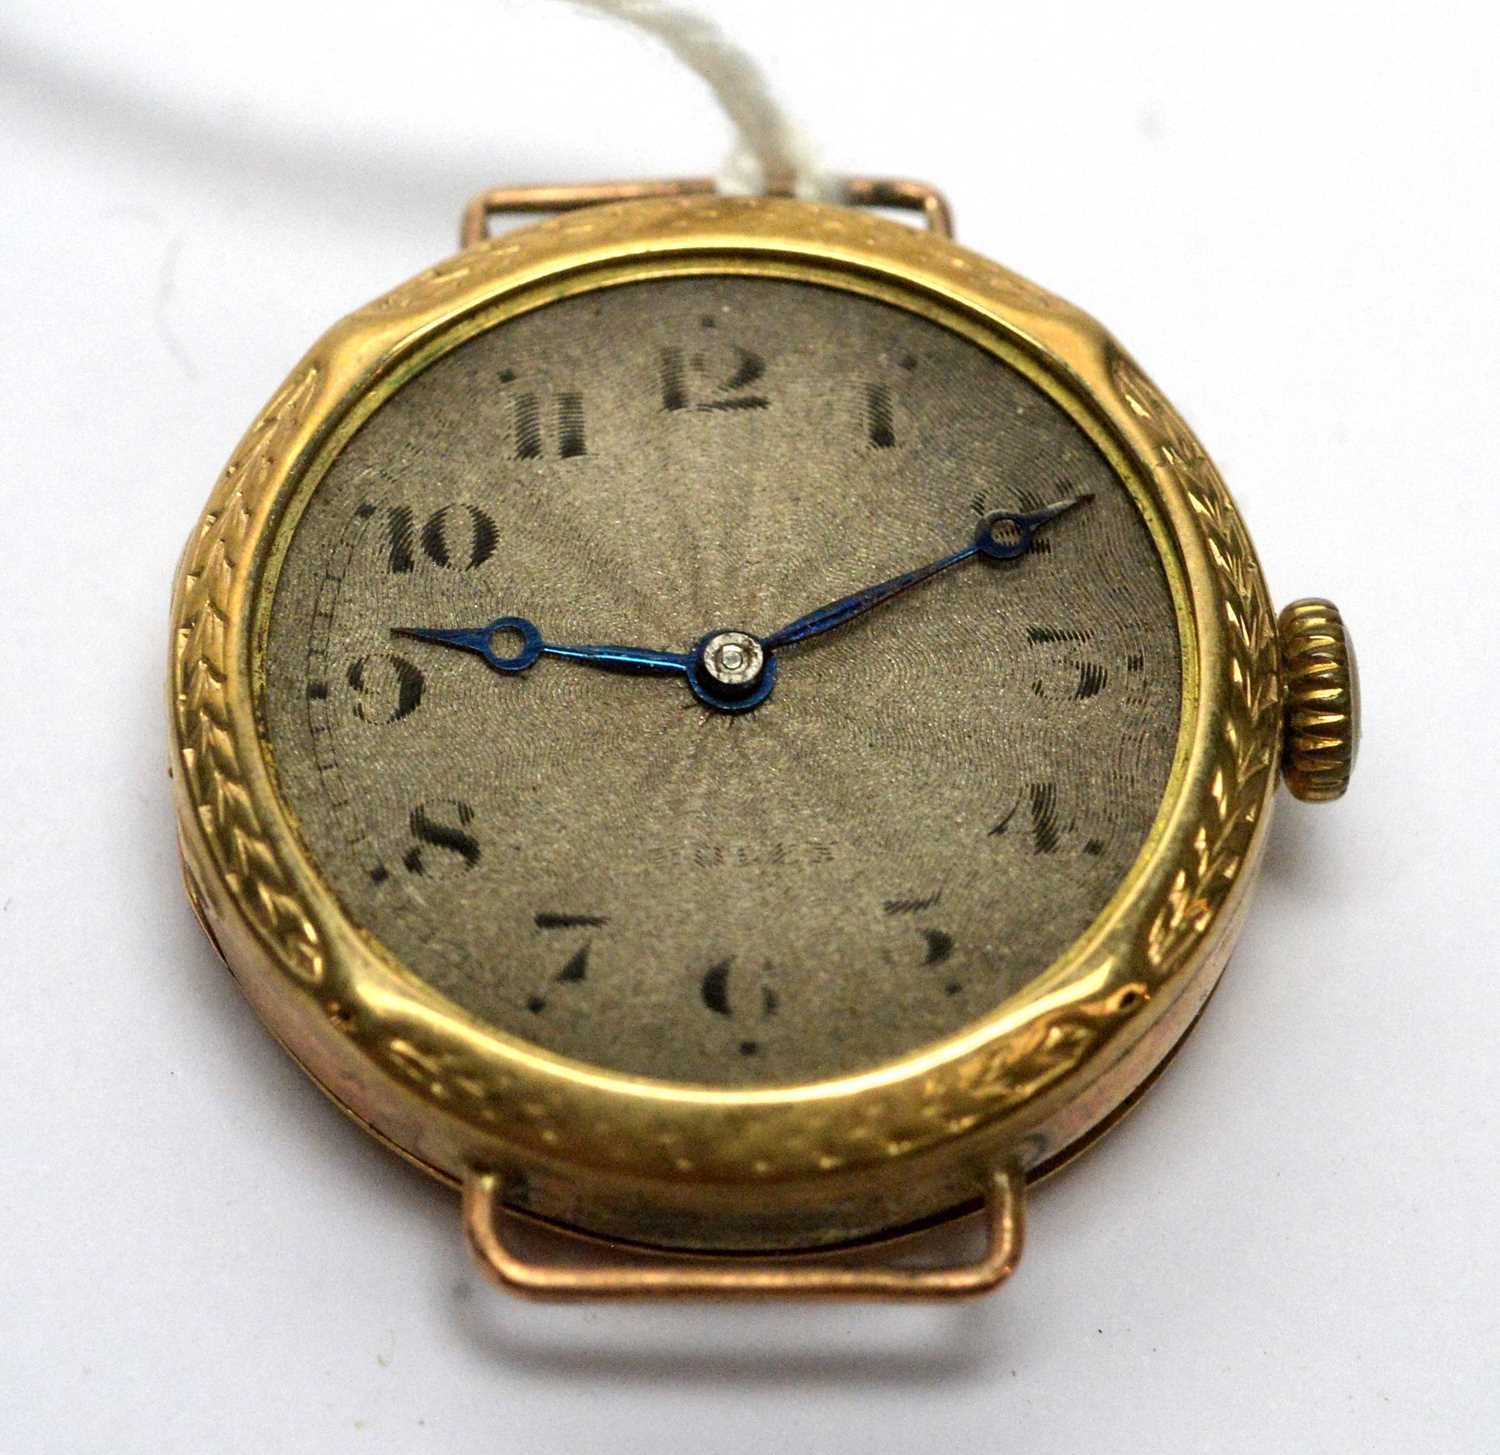 Lot 117 - A 9ct yellow gold Rolex wristwatch